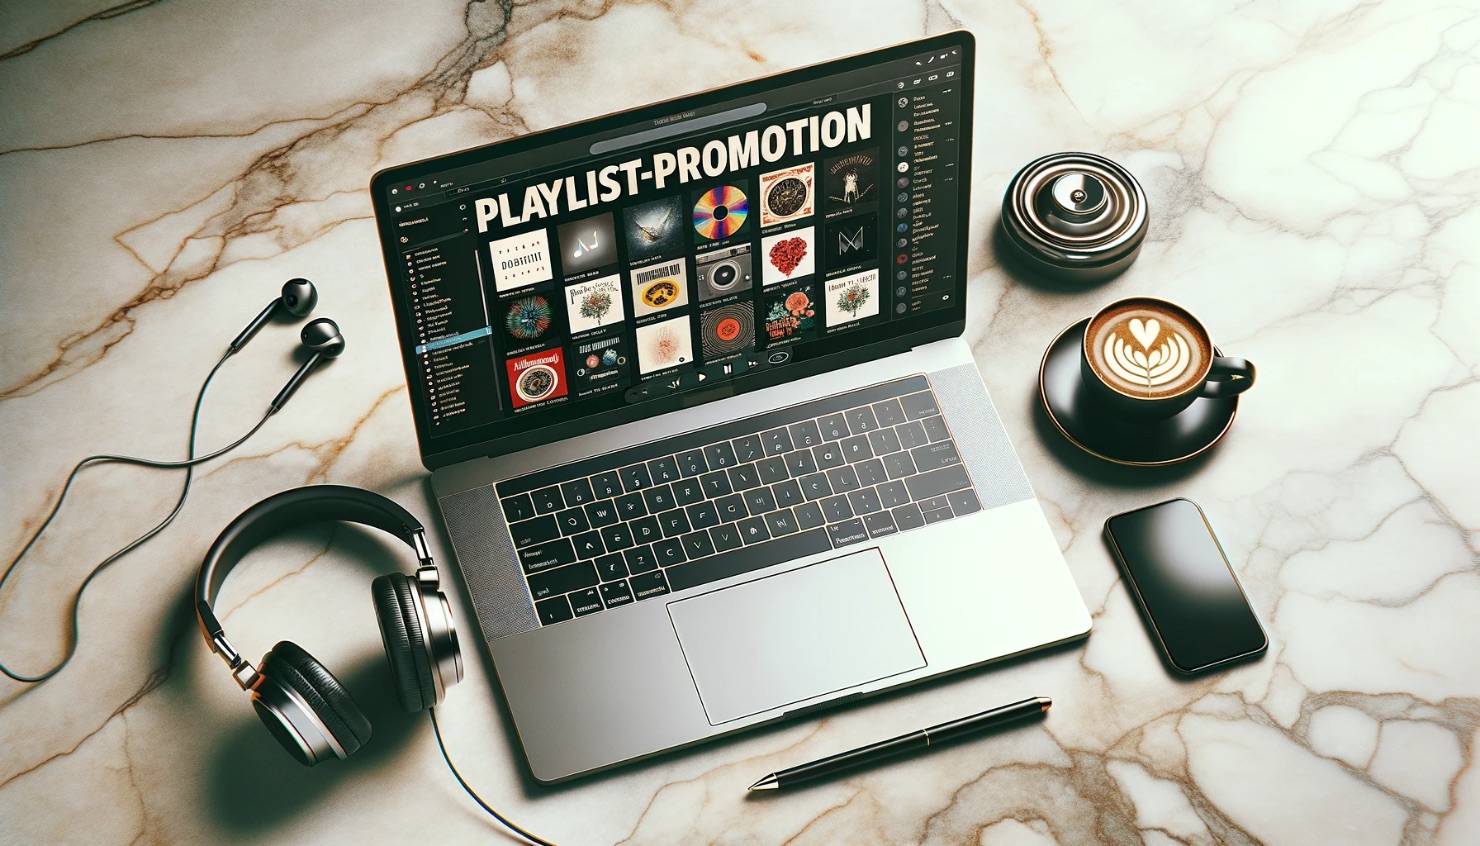 What Artists Should Know About Playlist-Promotion.com